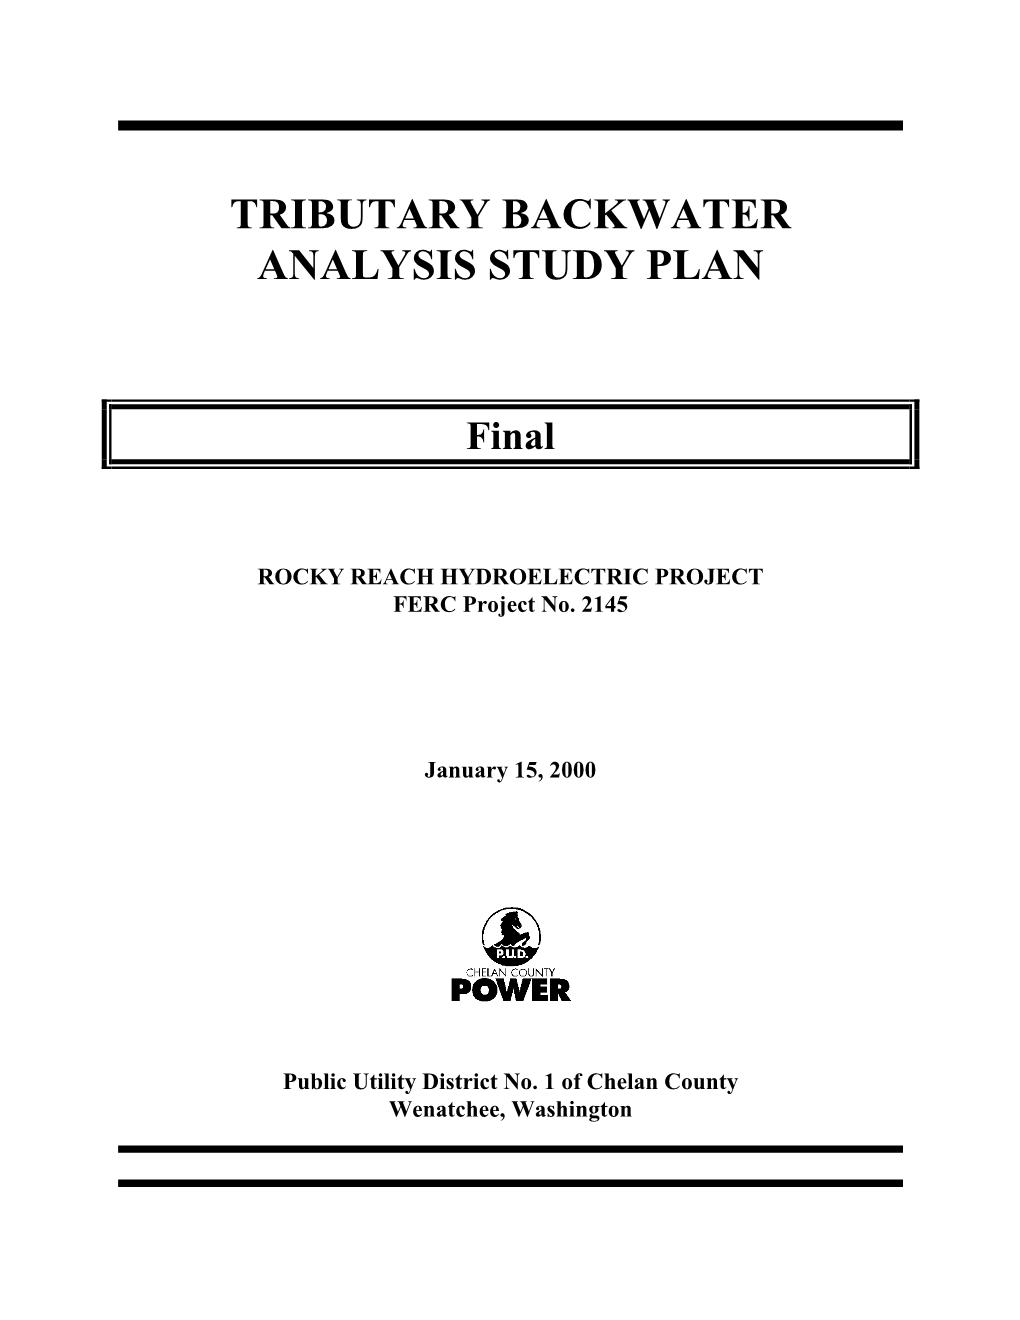 Tributary Backwater Analysis Study Plan